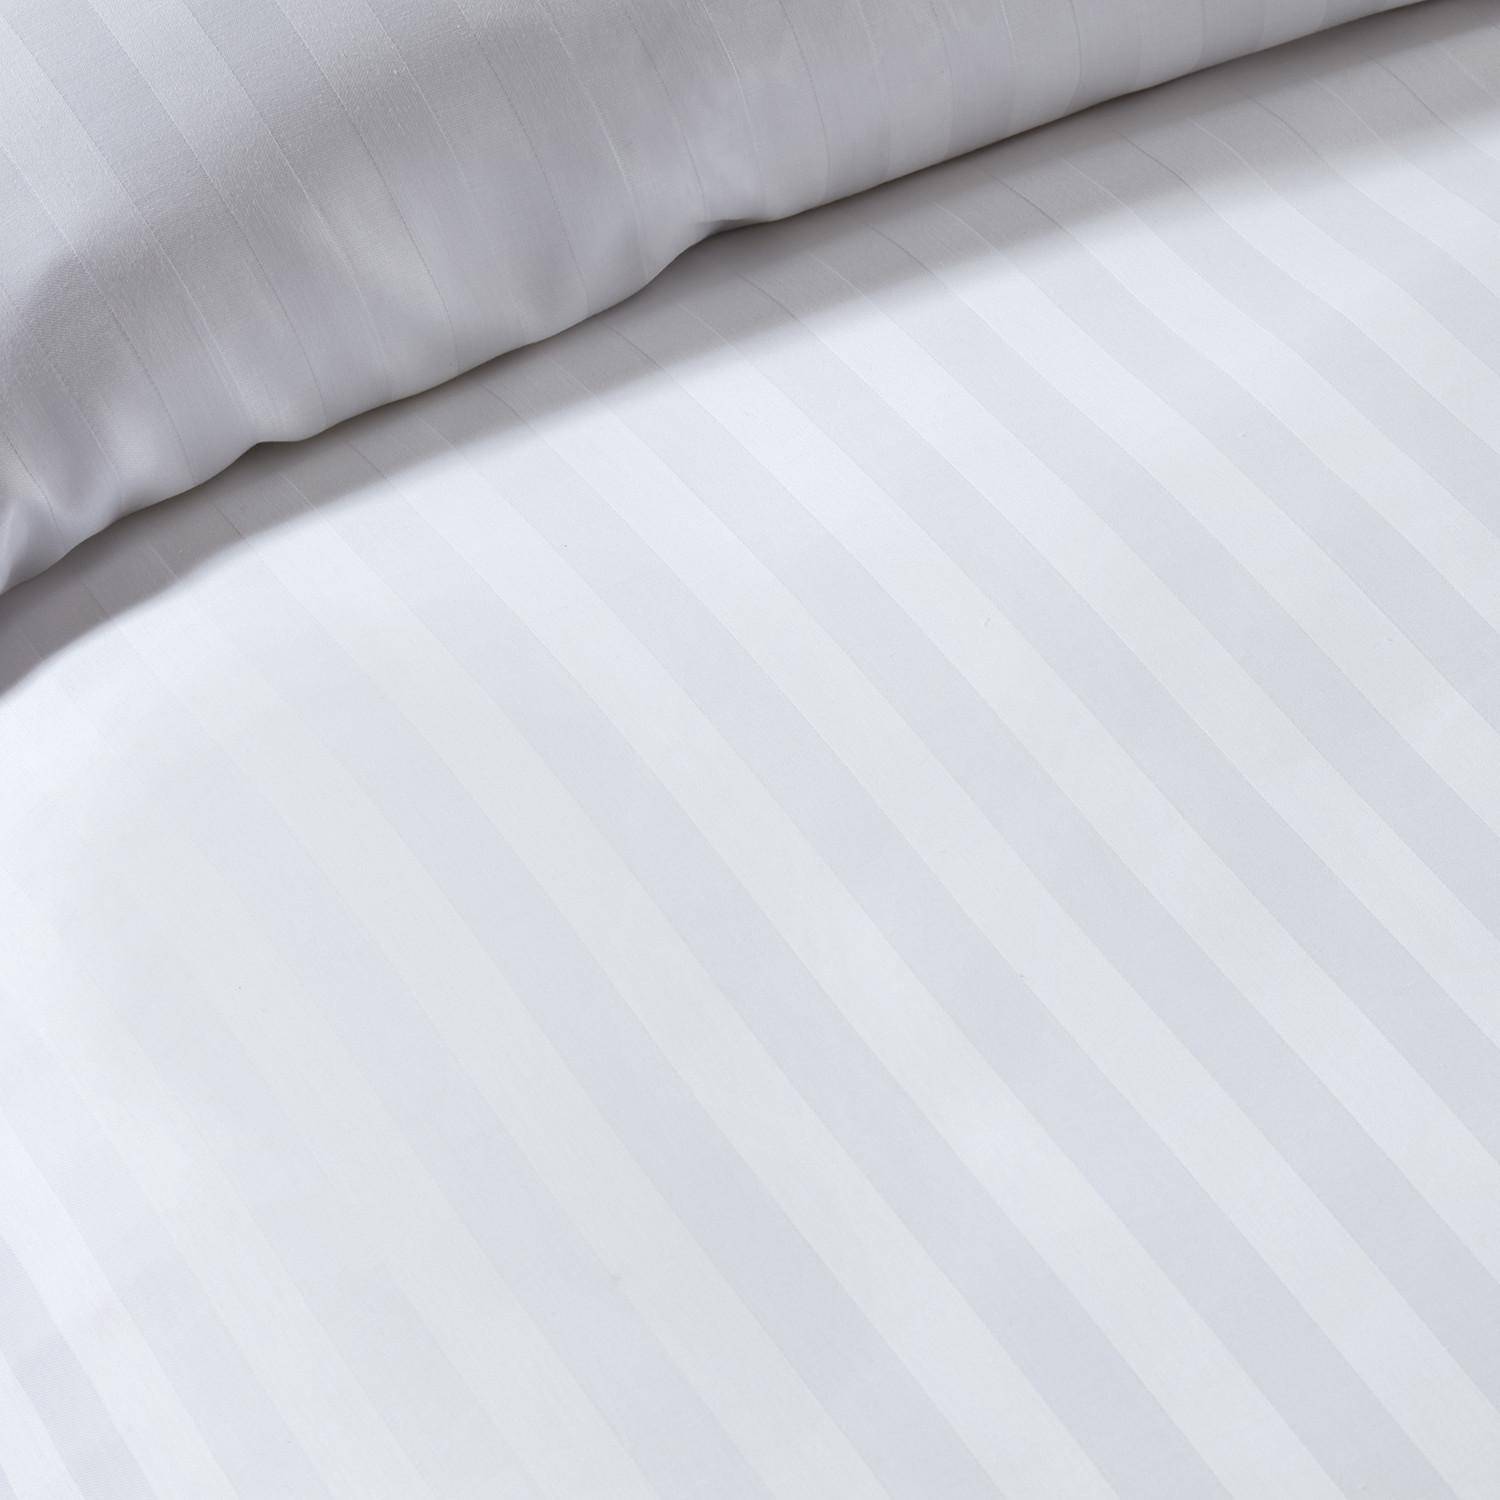 SOHUM Duvet Cover - Satin Stripe 100% Cotton 300TC - 92x102